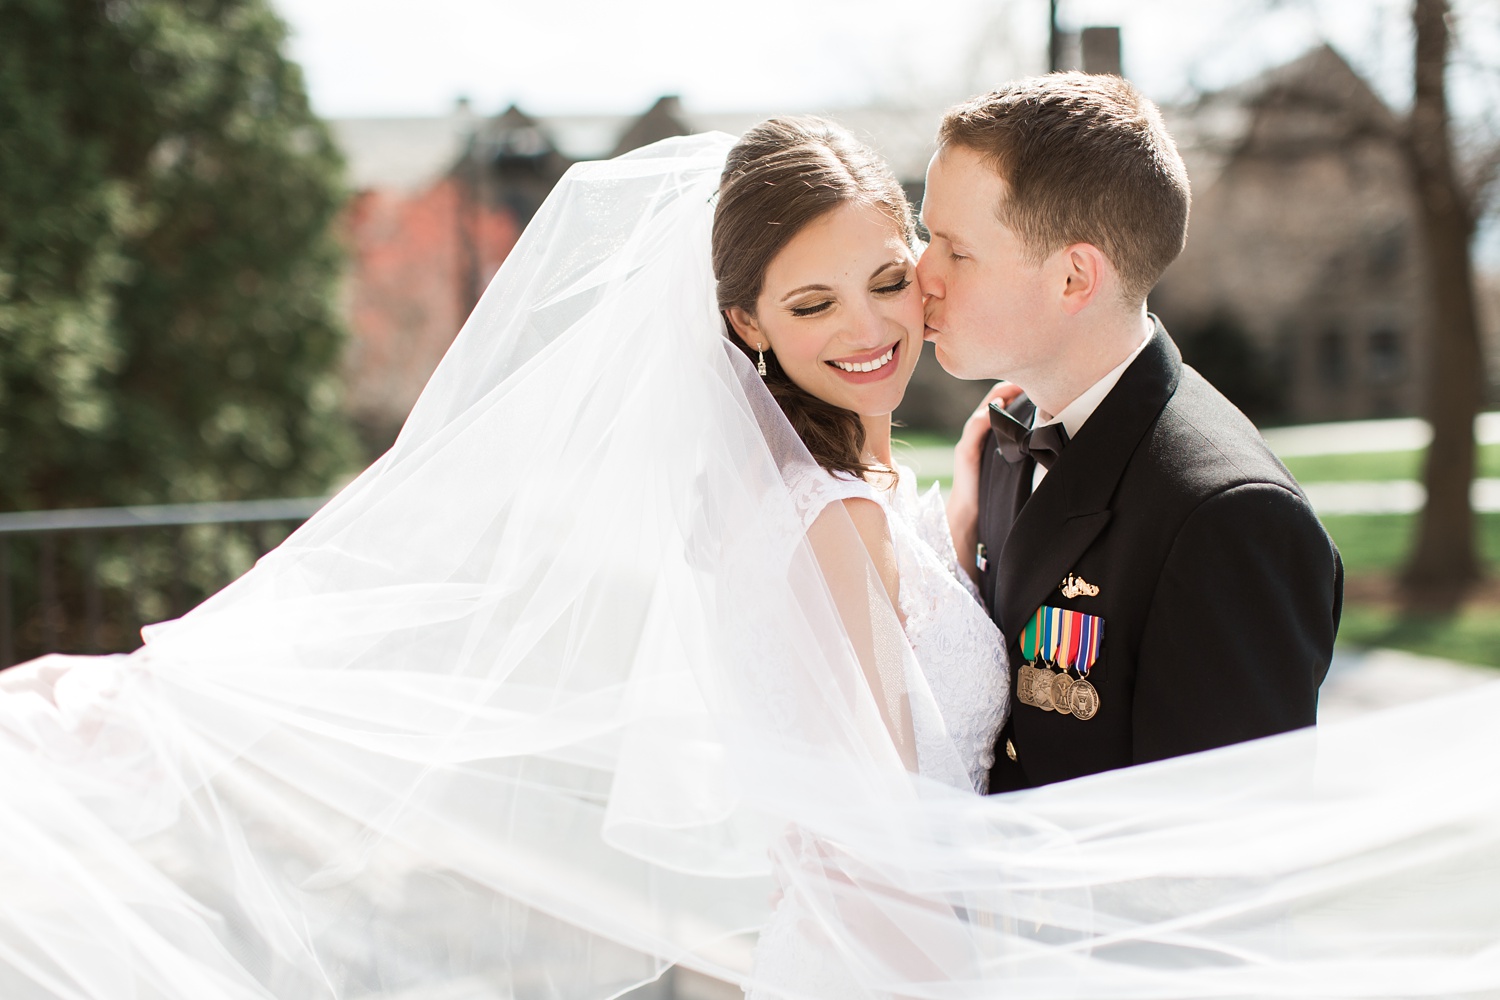 Mendenhall Inn Wedding Photography | Villanova Wedding Spring Ceremony | Lauren and Liam